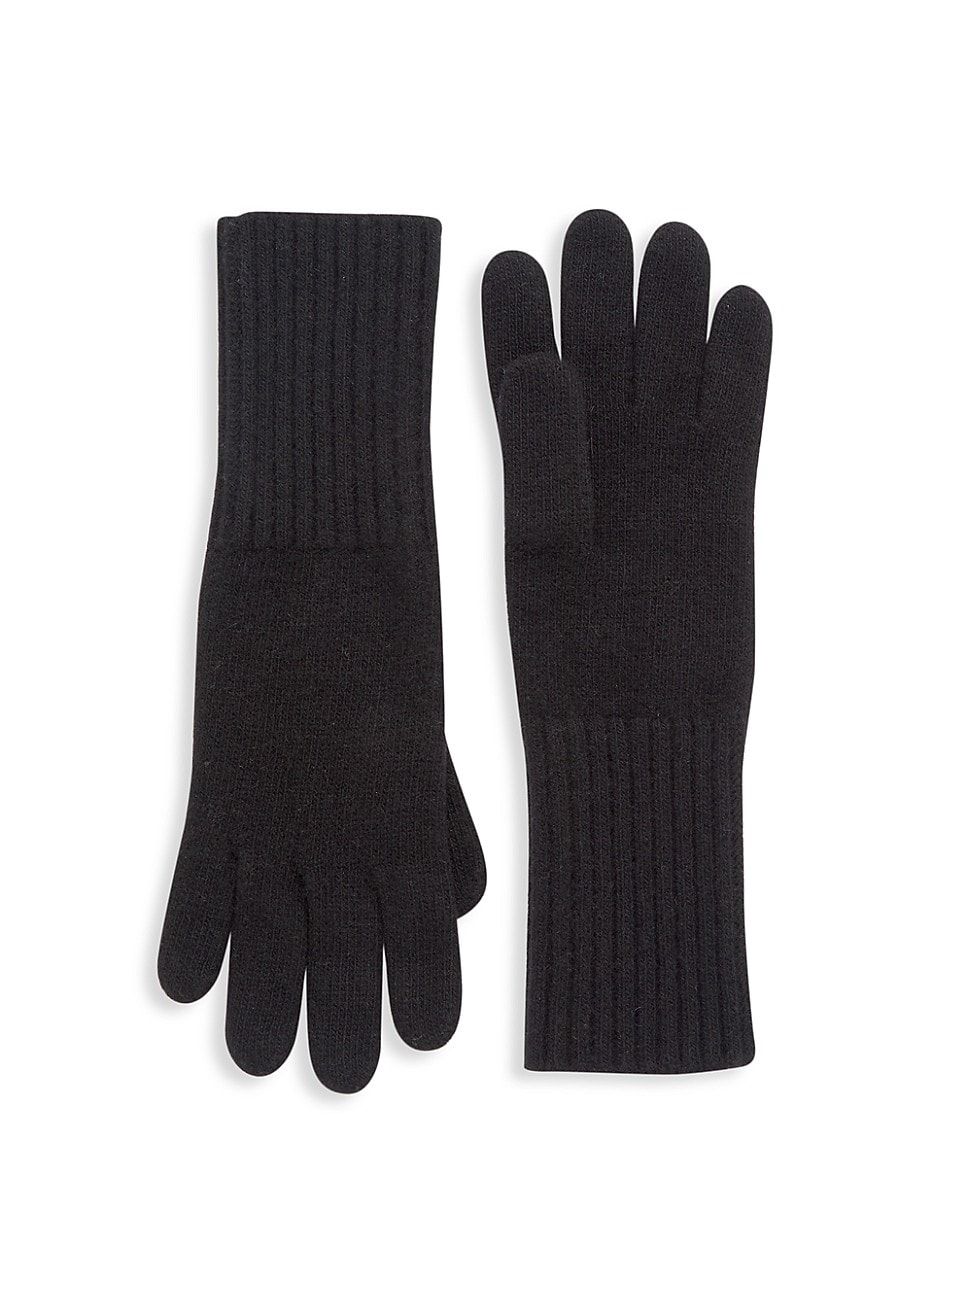 Saks Fifth Avenue Women's Knit Cashmere Gloves - Black | Saks Fifth Avenue